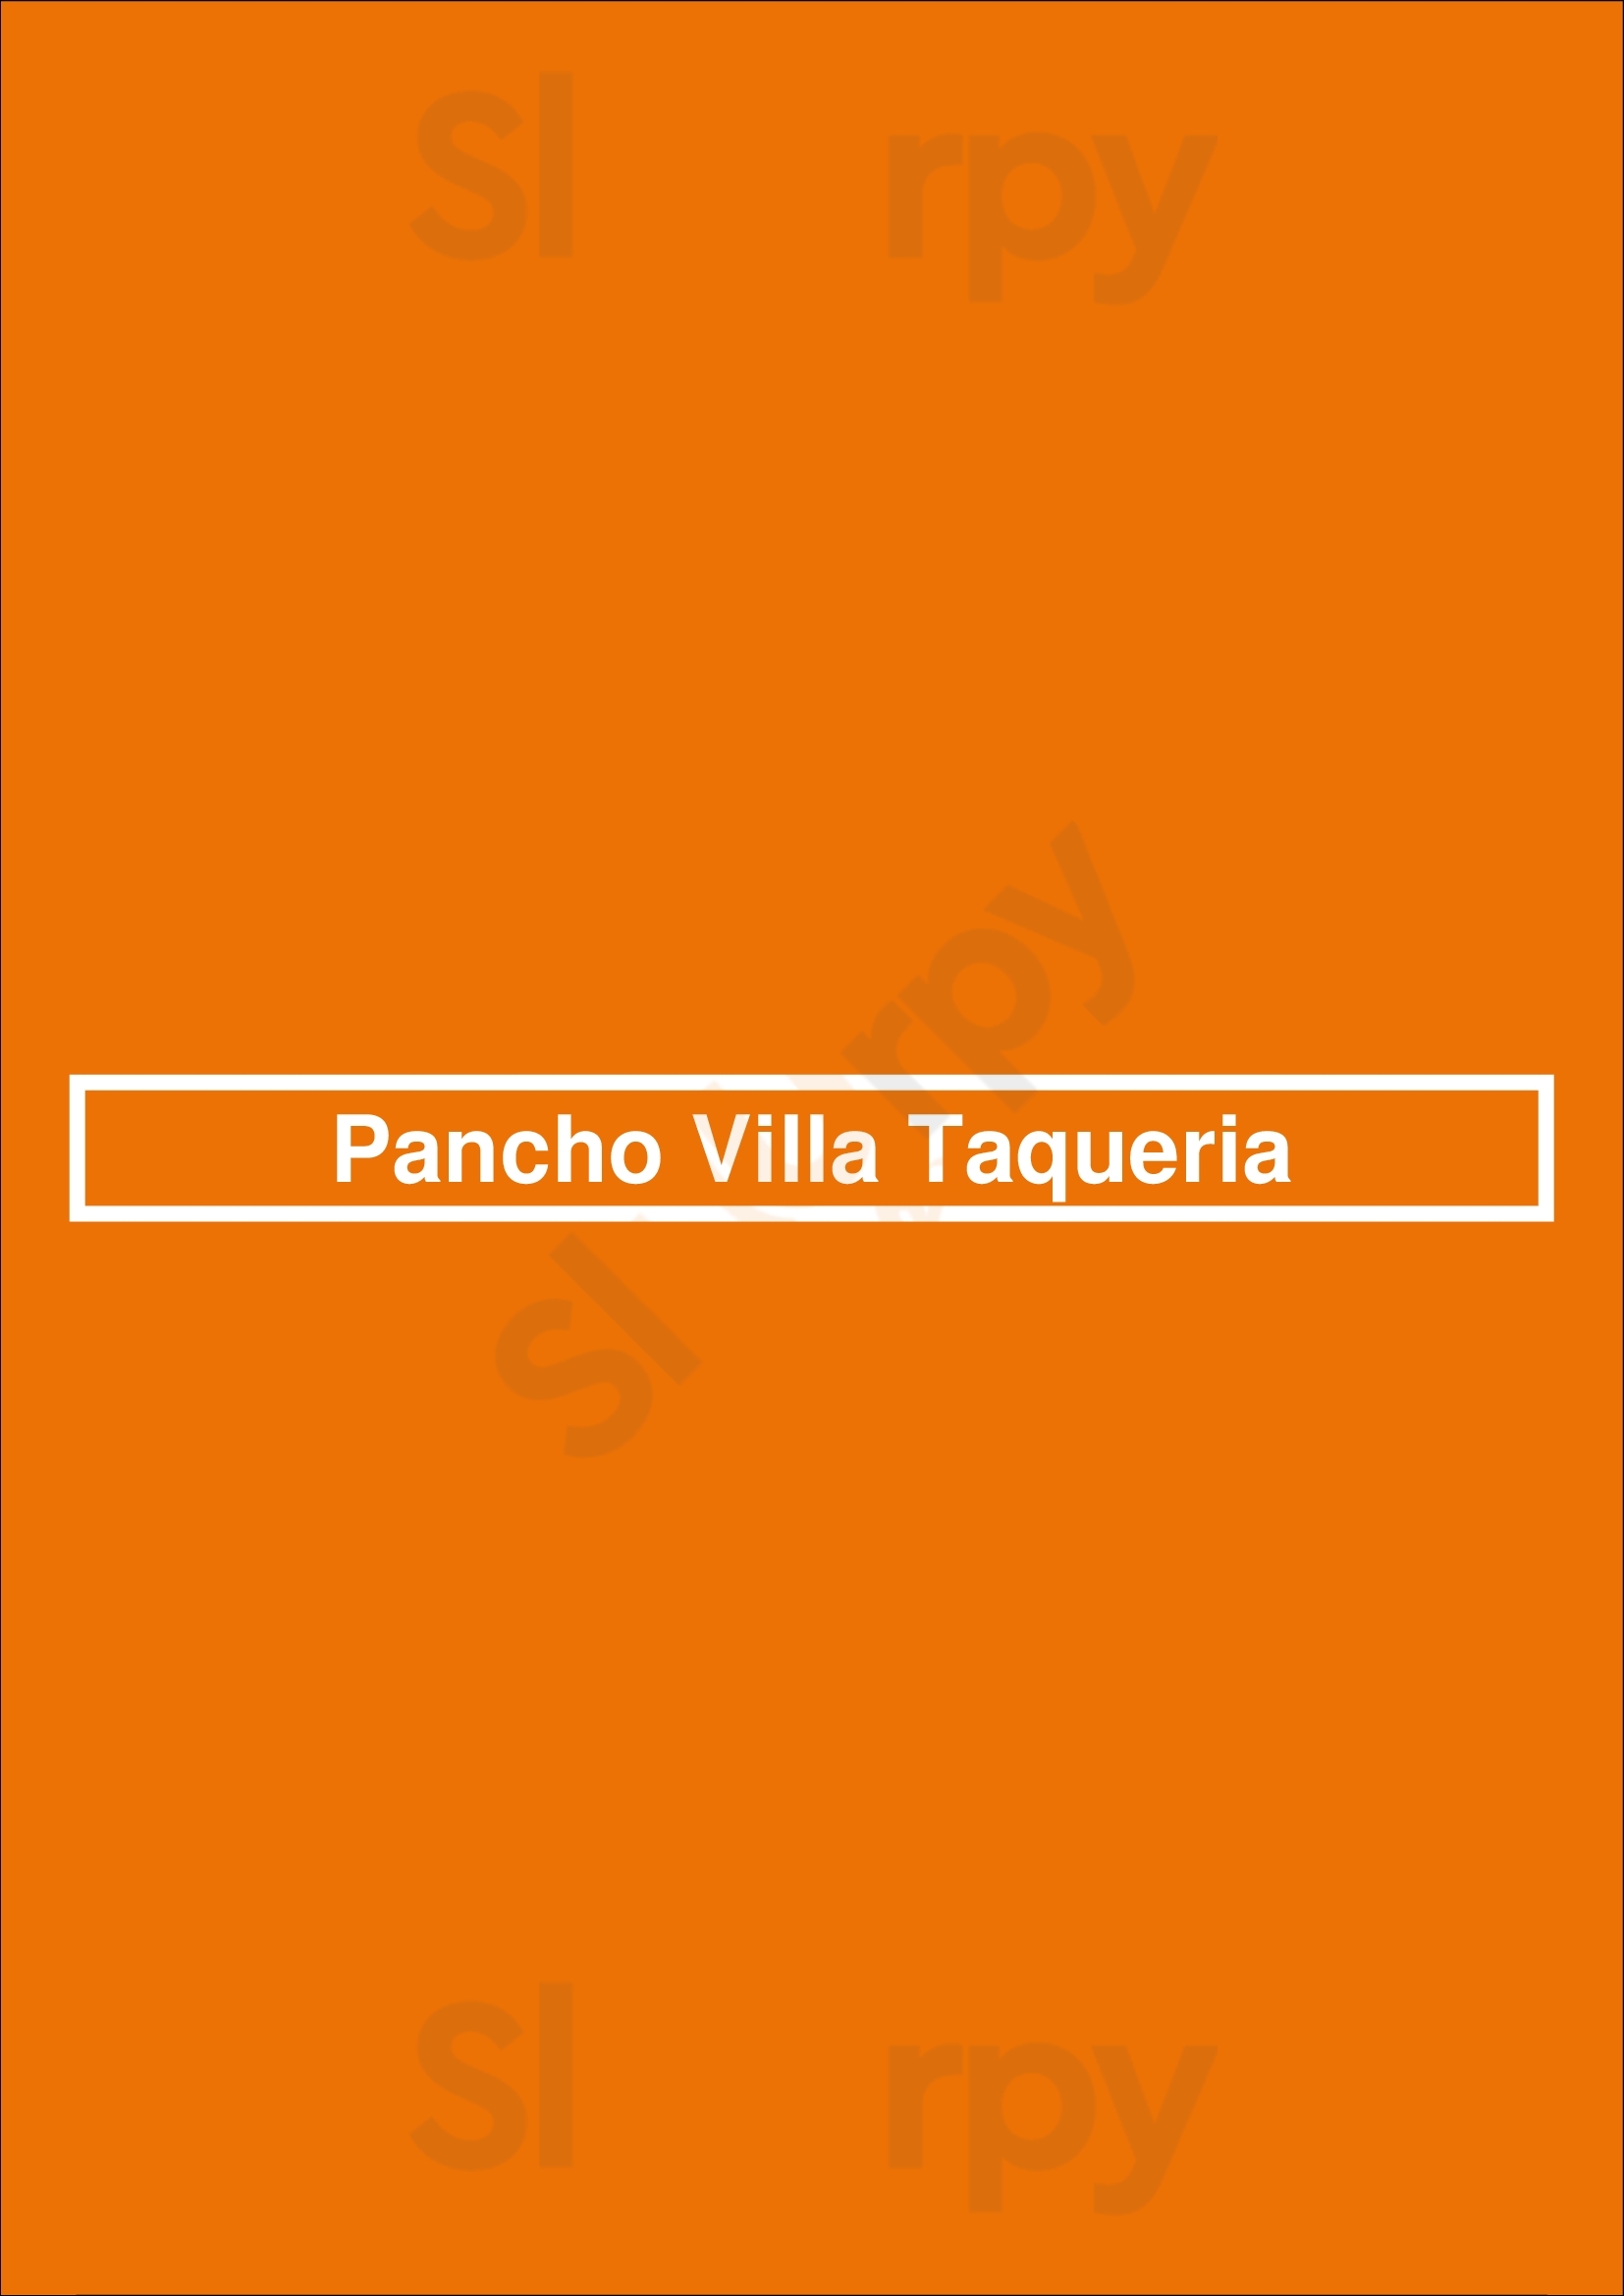 Pancho Villa Taqueria San Mateo Menu - 1